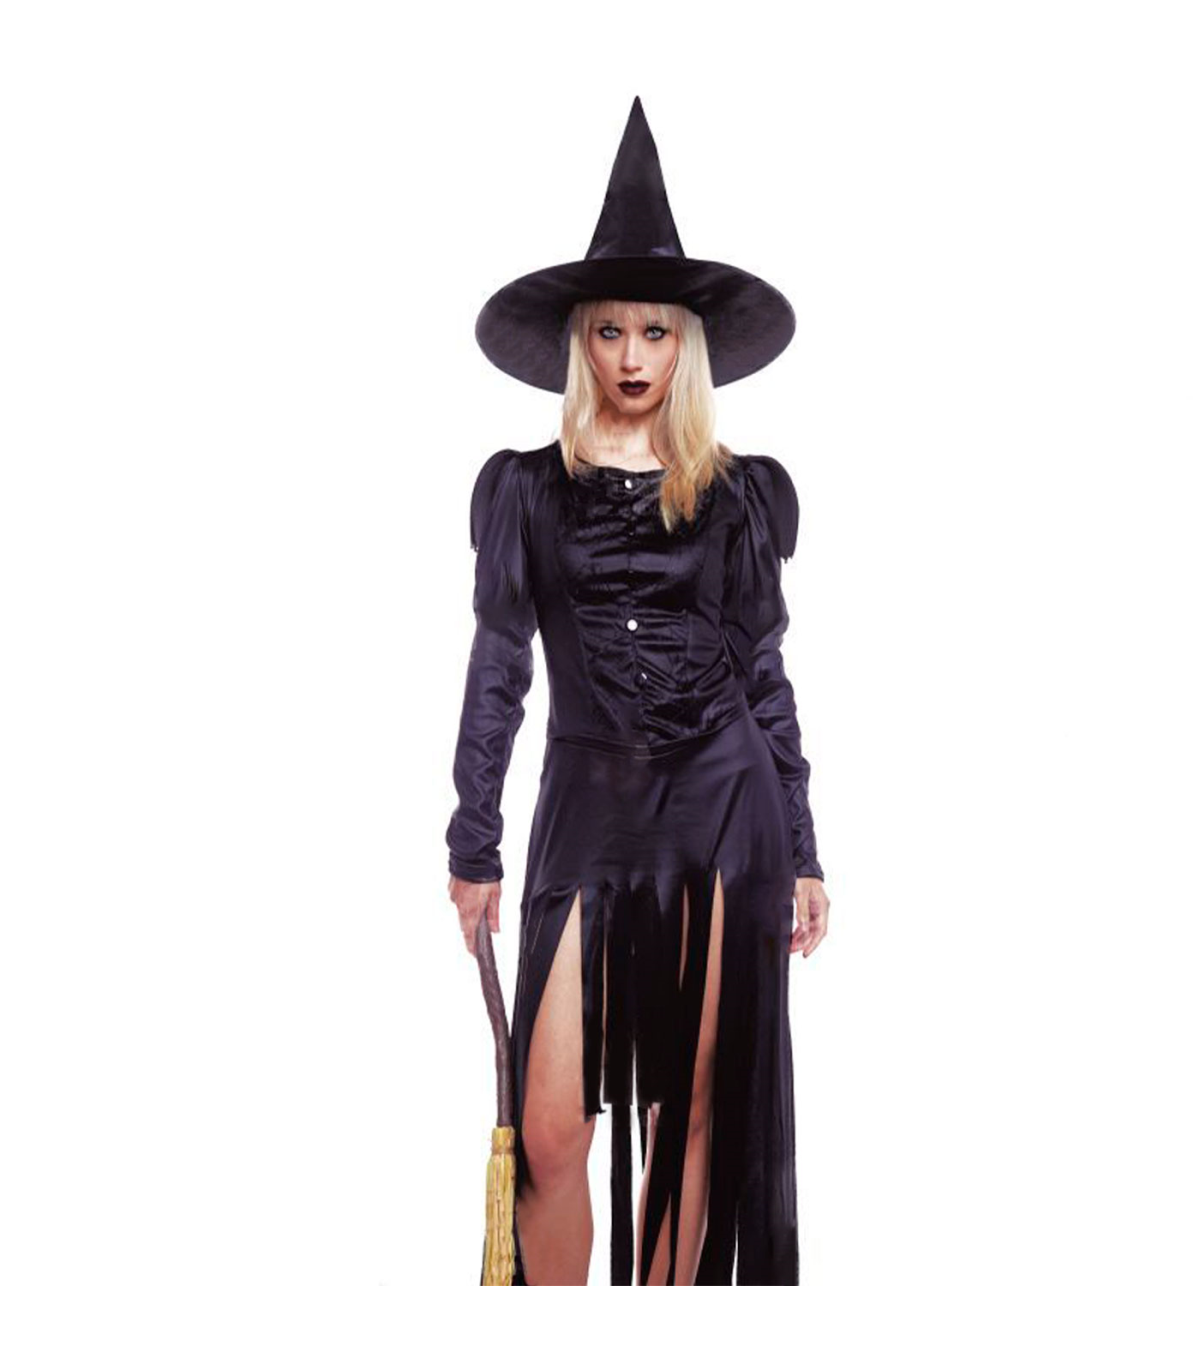 Tradineur - Disfraz de bruja negra para mujer, poliéster, incluye